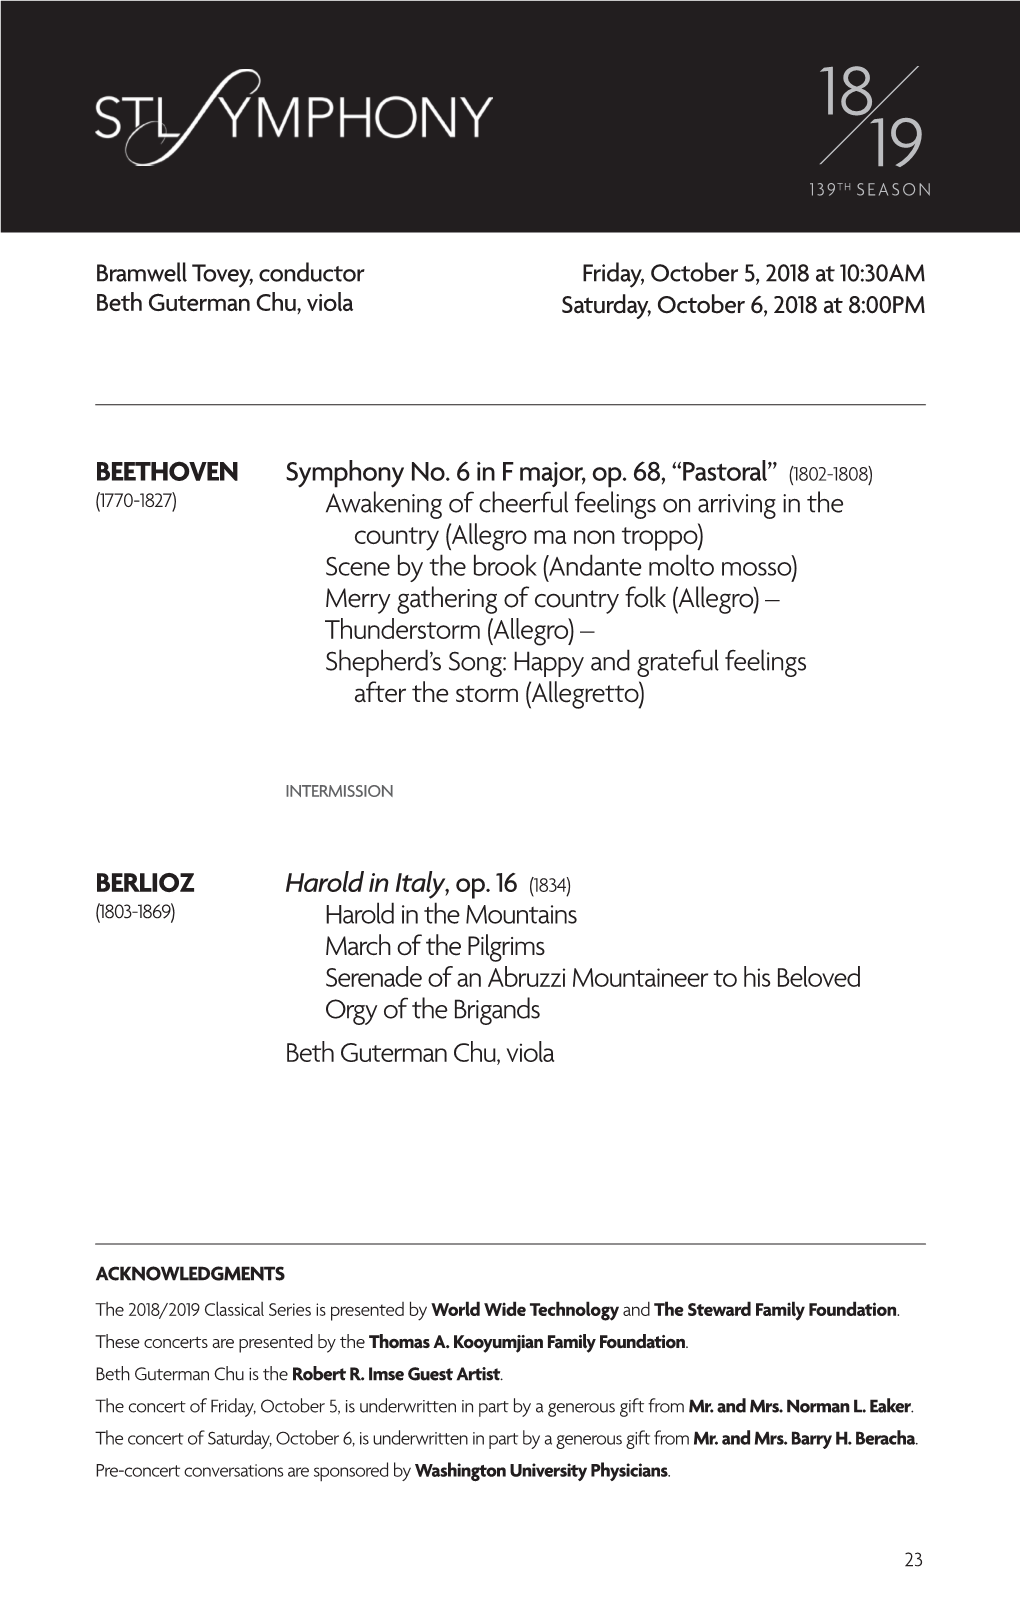 BEETHOVEN Symphony No. 6 in F Major, Op. 68, “Pastoral” (1802-1808)